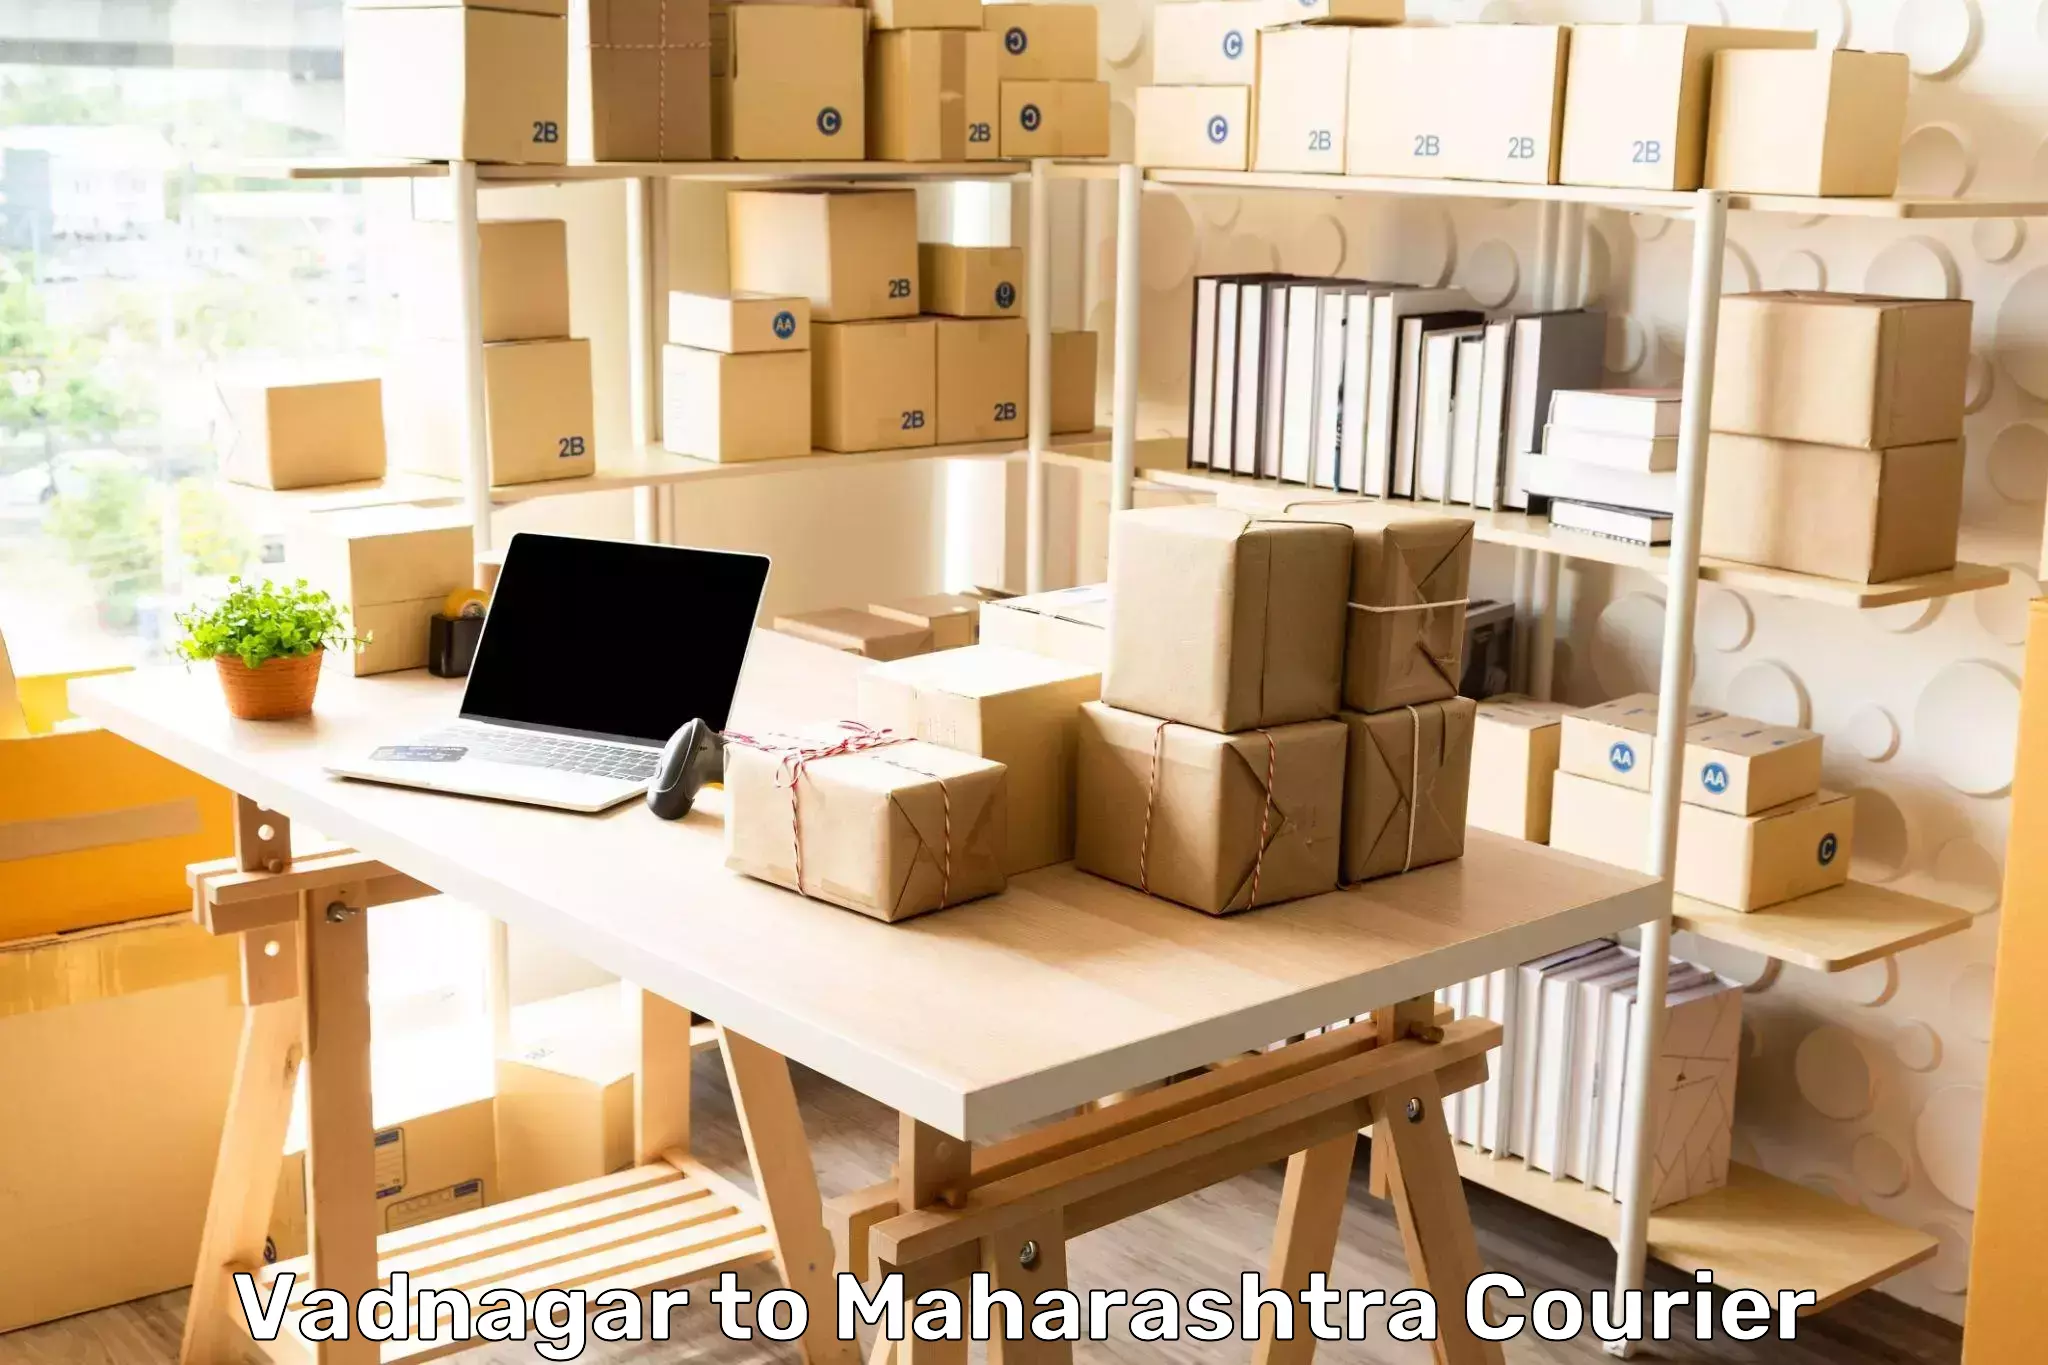 24-hour courier service Vadnagar to DY Patil Vidyapeeth Mumbai